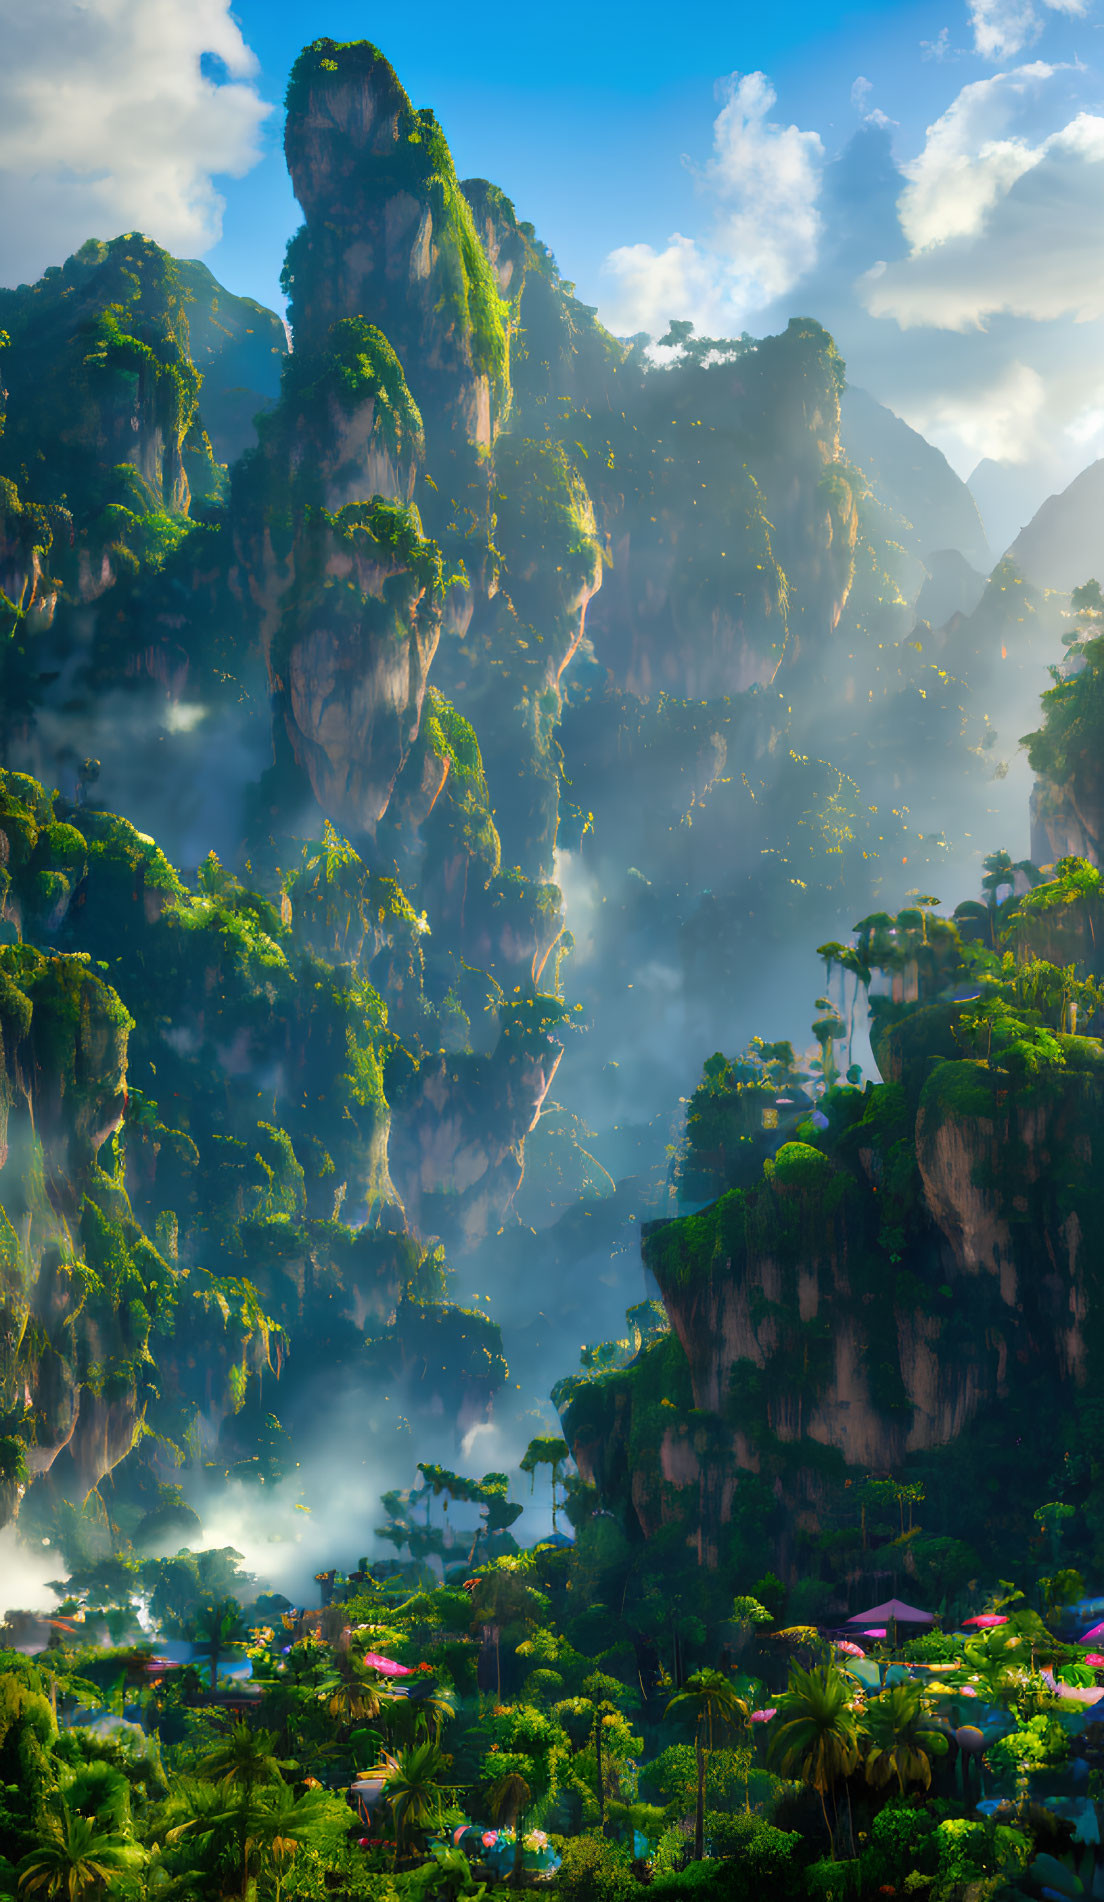 Verdant cliffs in mist above lush jungle in soft light